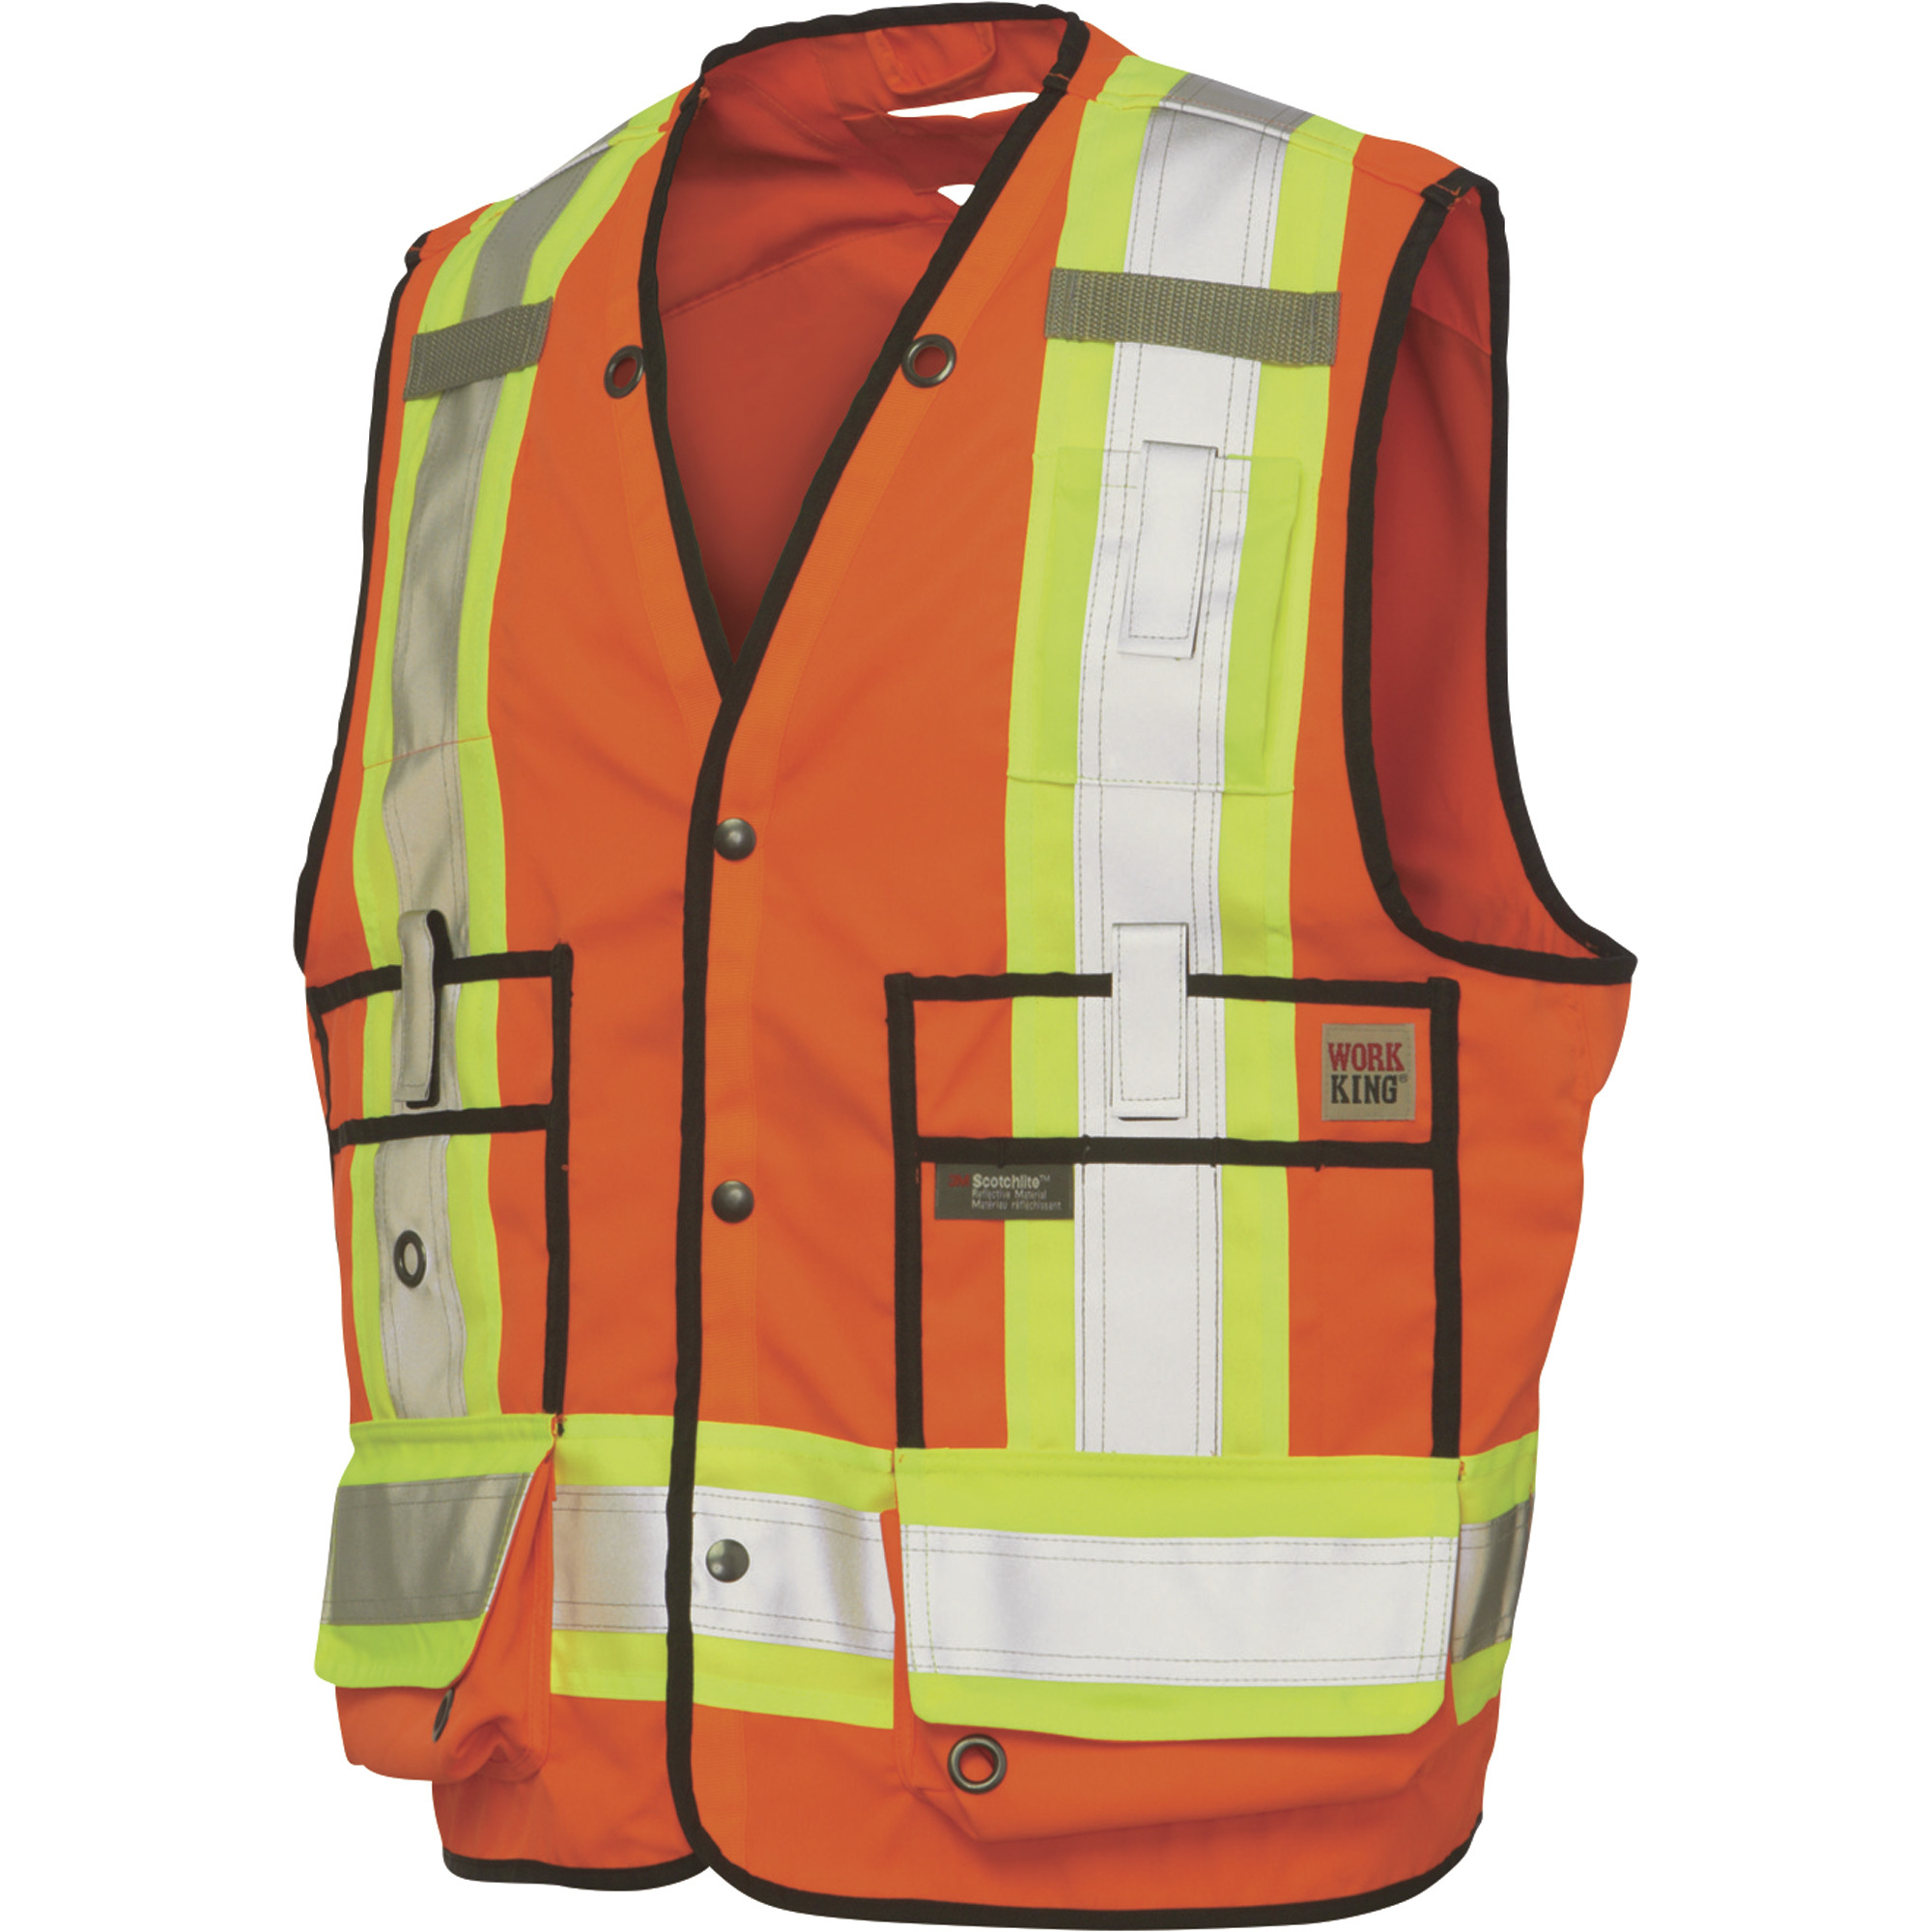 Work King Men's Class 2 High Visibility Surveyor Vest â Orange, 2XL, Model S31311